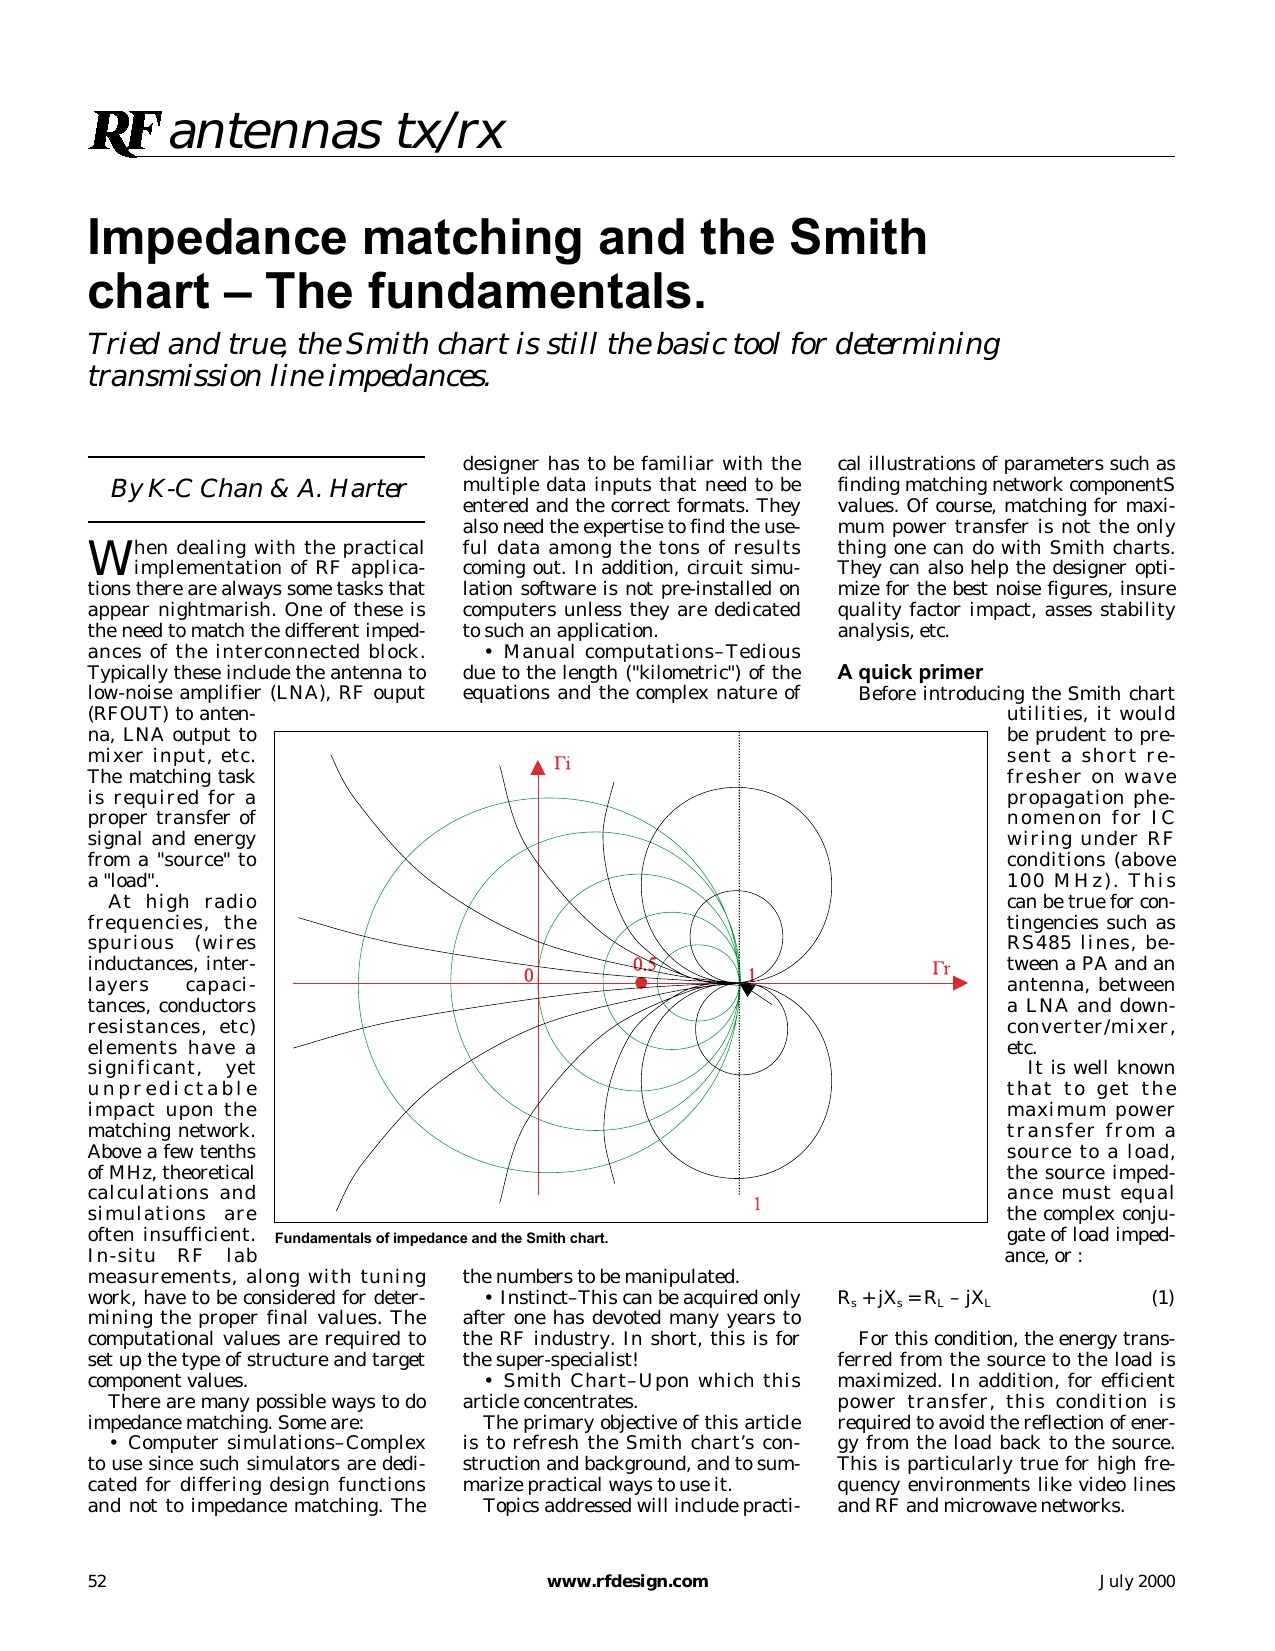 Smith Chart Admittance Impedance